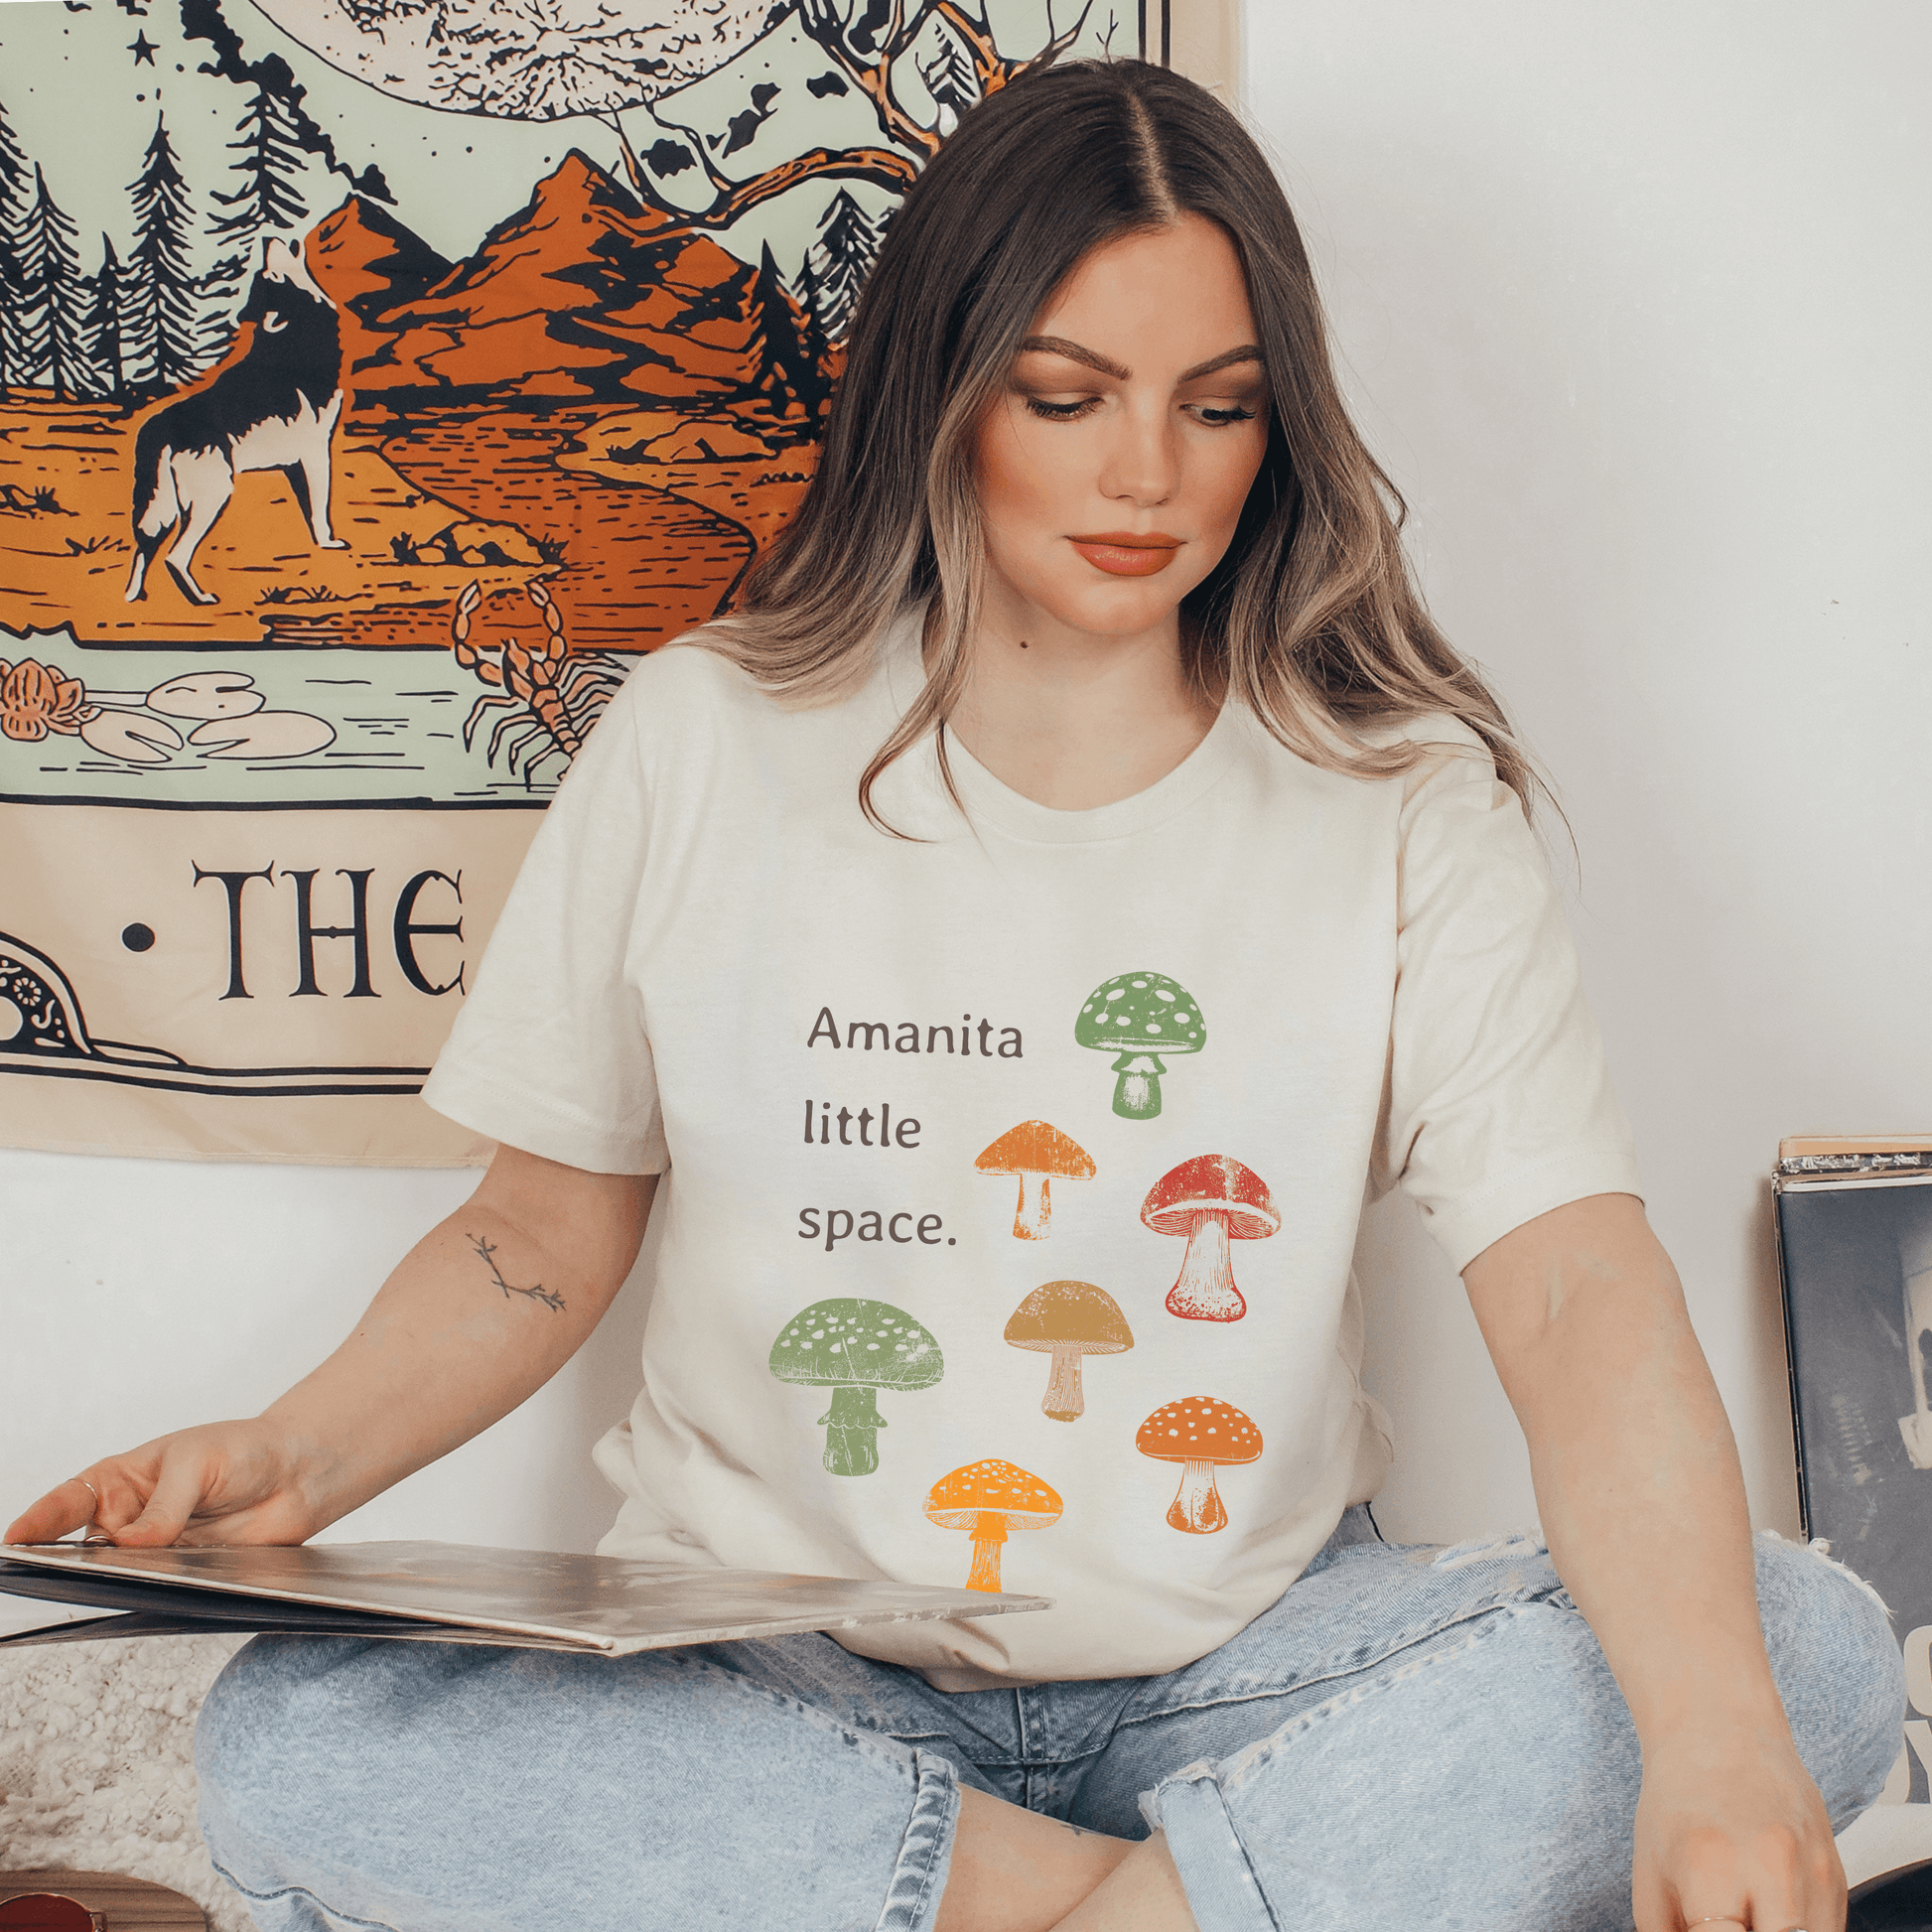 Amanita Little Space Mushroom Shirt for Men and Women